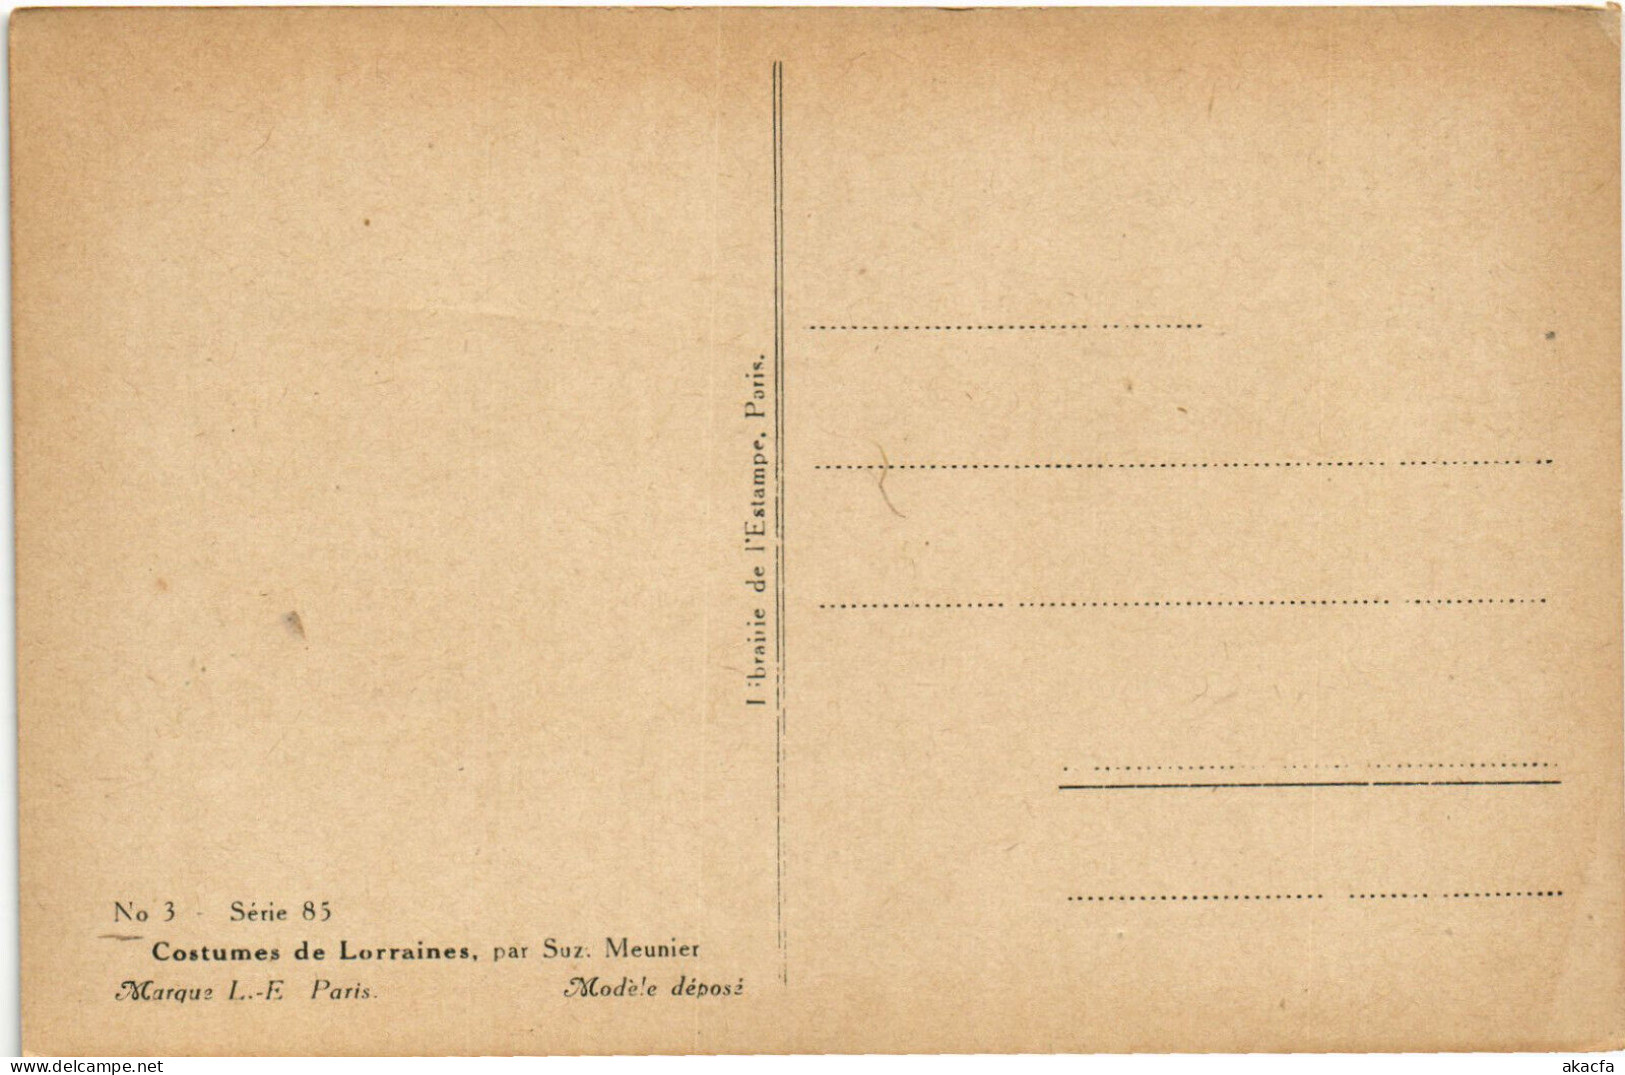 PC ARTIST SIGNED, MEUNIER, COSTUMES DE LORRAINES, Vintage Postcard (b51683) - Meunier, S.